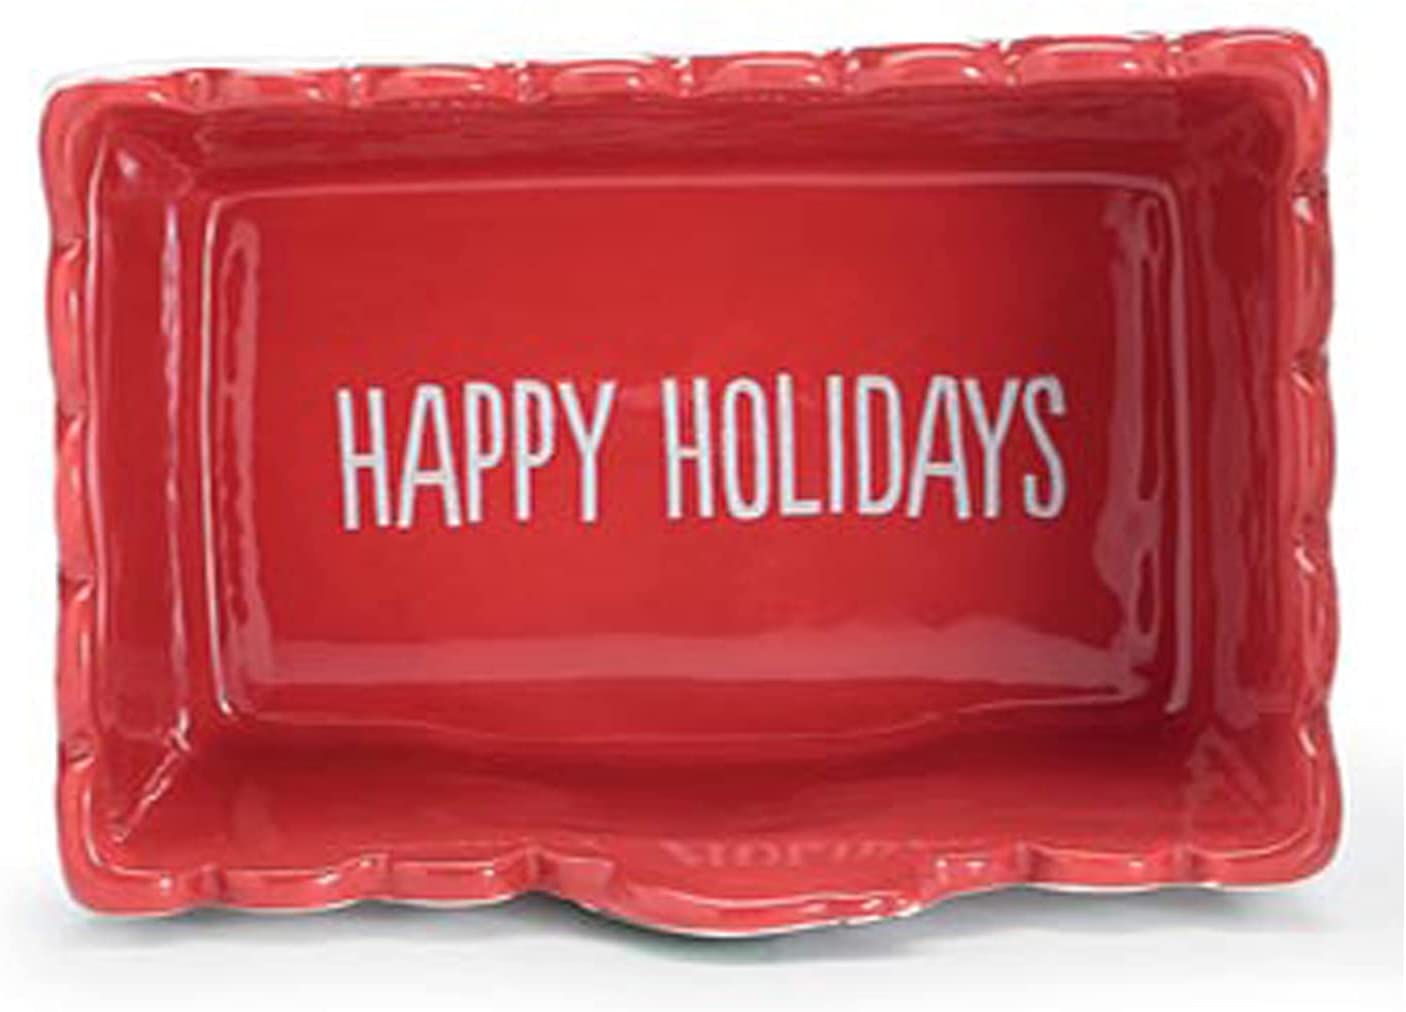 Christmas Stockings Ceramic Mug with Red Interior Festive Christmas Xm -  One Holiday Way